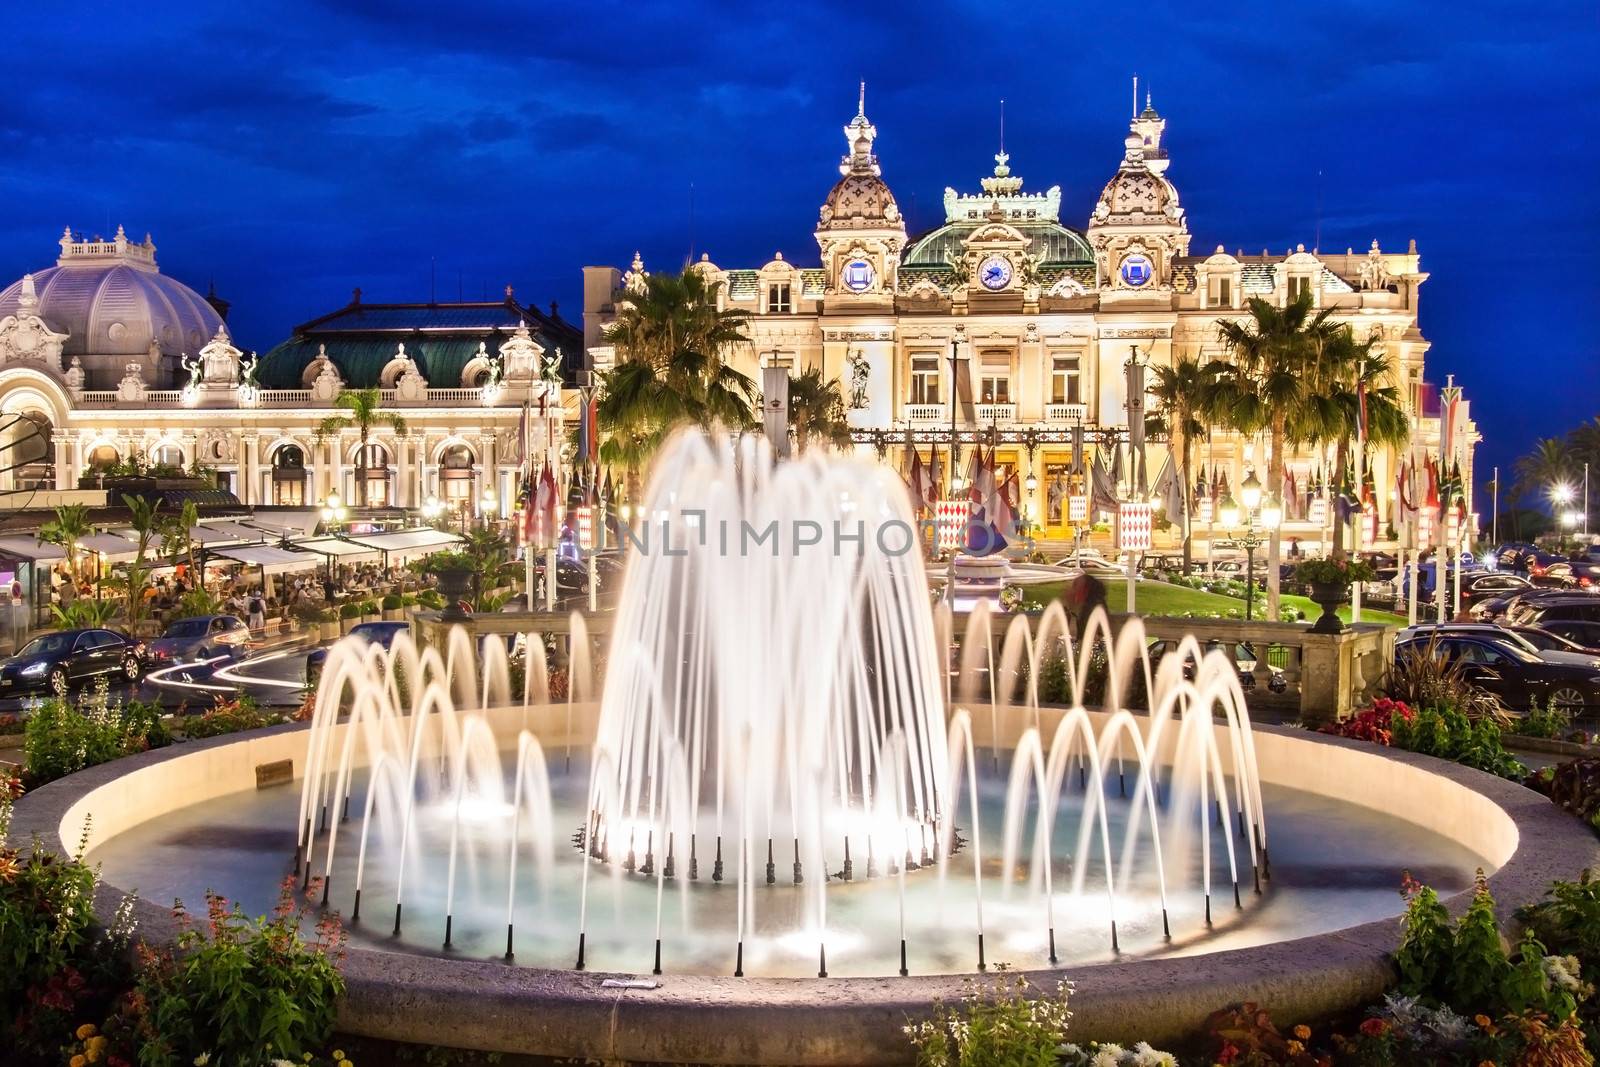 Casino of Monte Carlo. by kasto